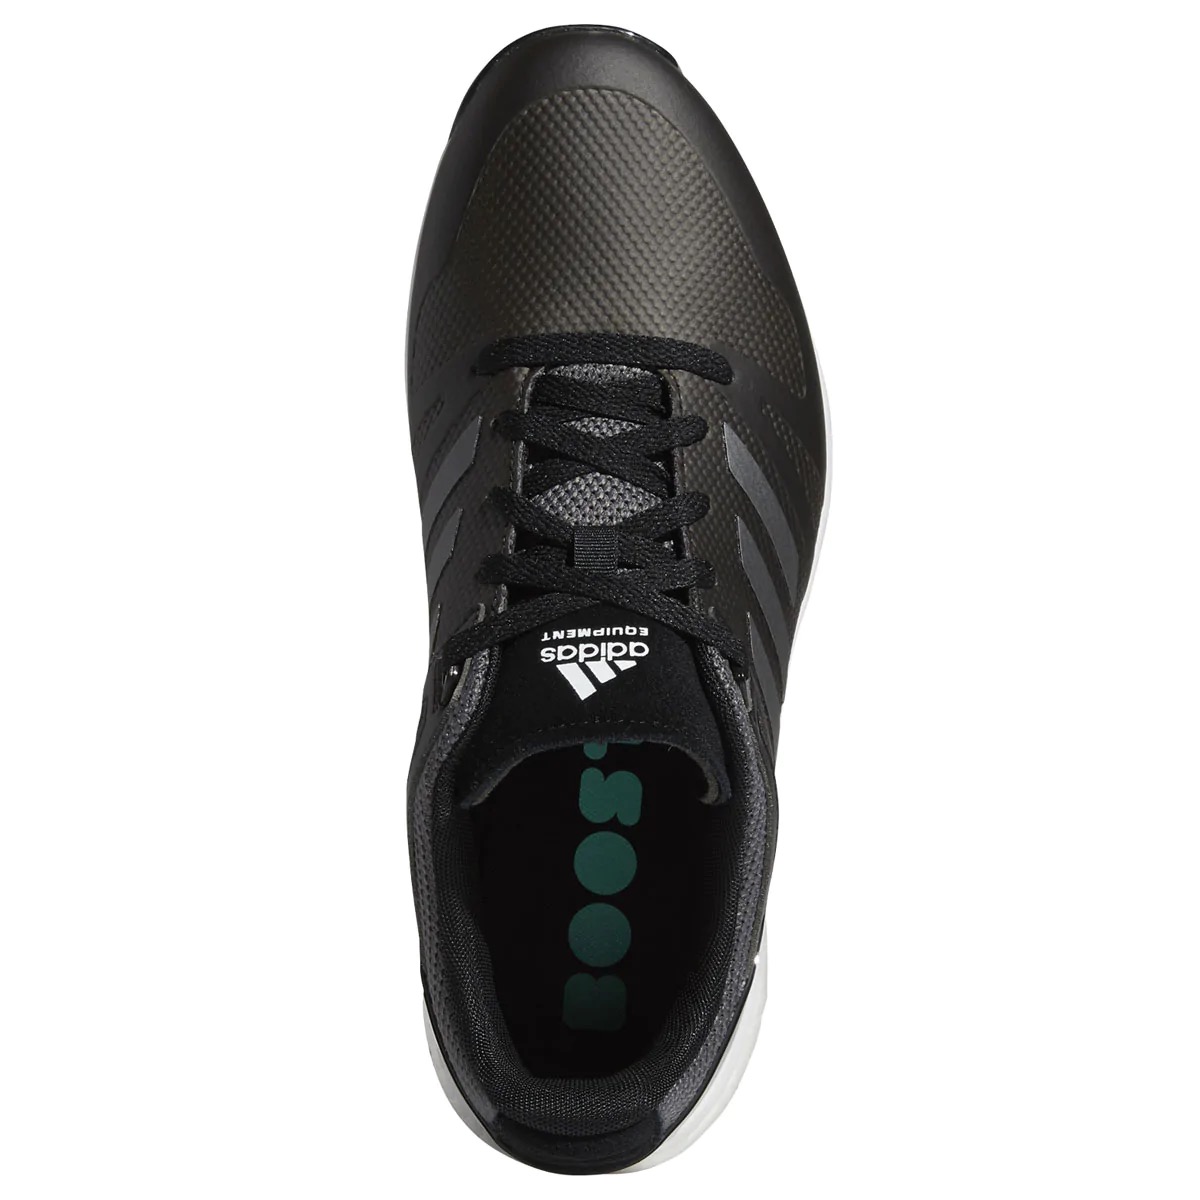 Adidas EQT Black Herren